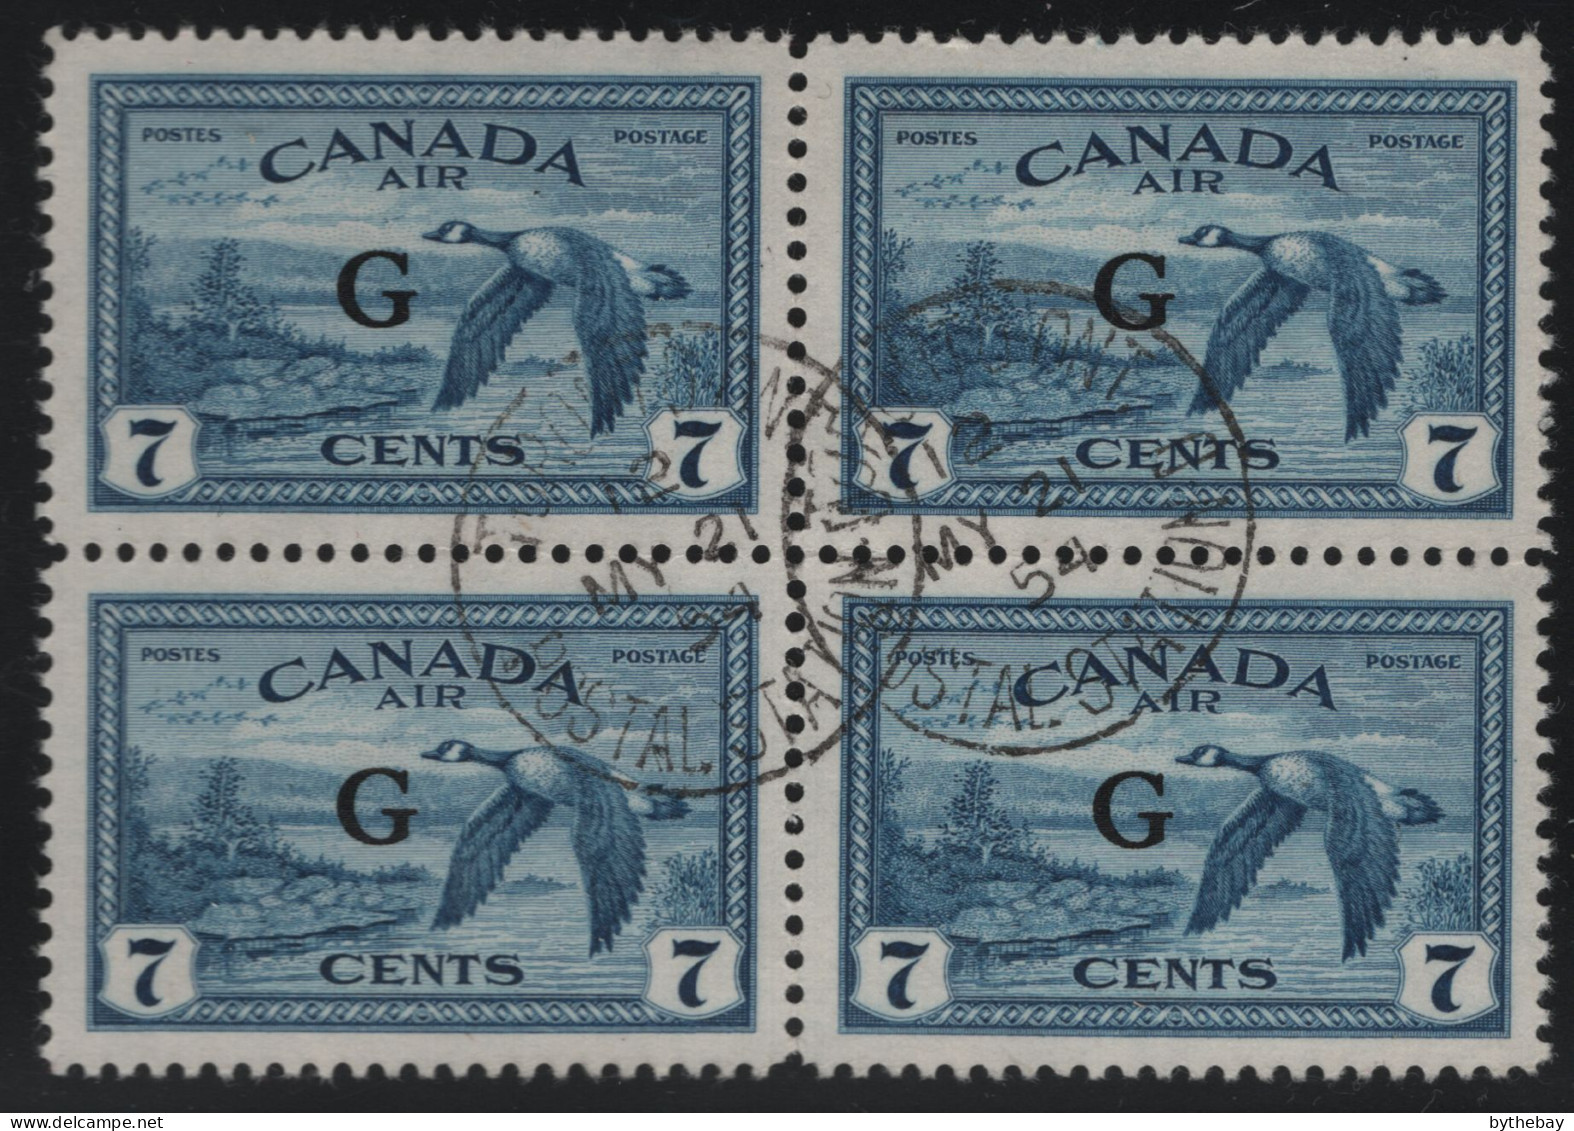 Canada 1950 Used Sc CO2 7c Canada Goose With G Overprint Block Of 4 CDS MY 21 54 - Aufdrucksausgaben